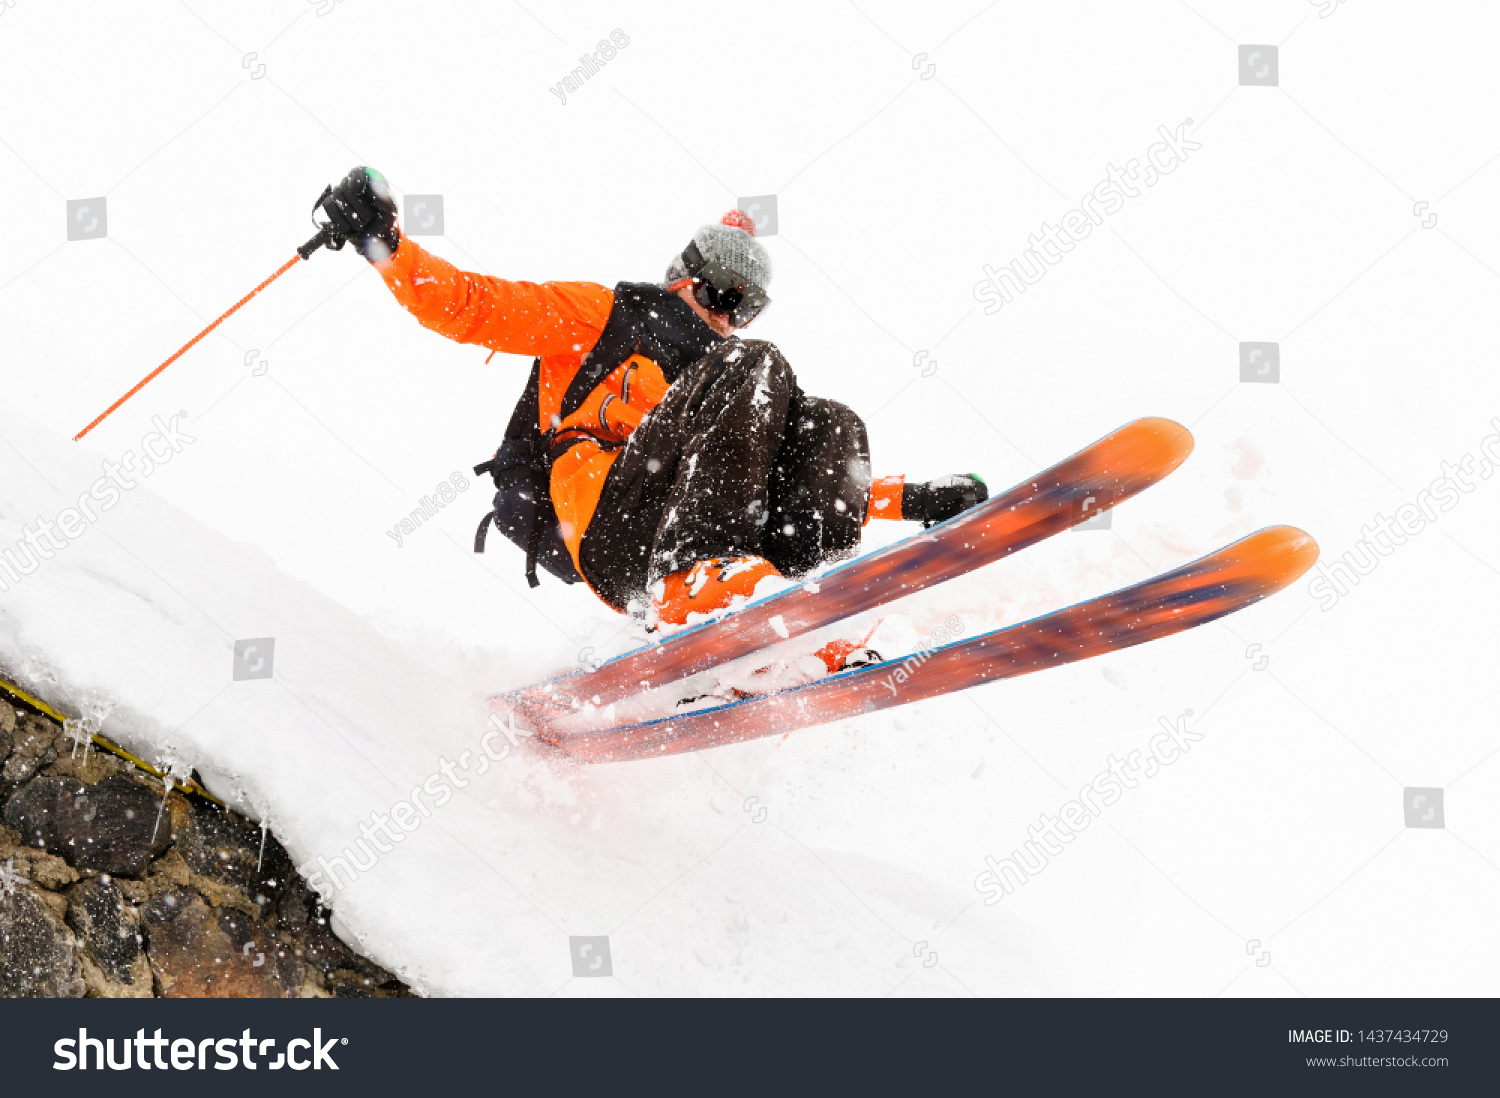 30,759 Ski black background Images, Stock Photos & Vectors | Shutterstock